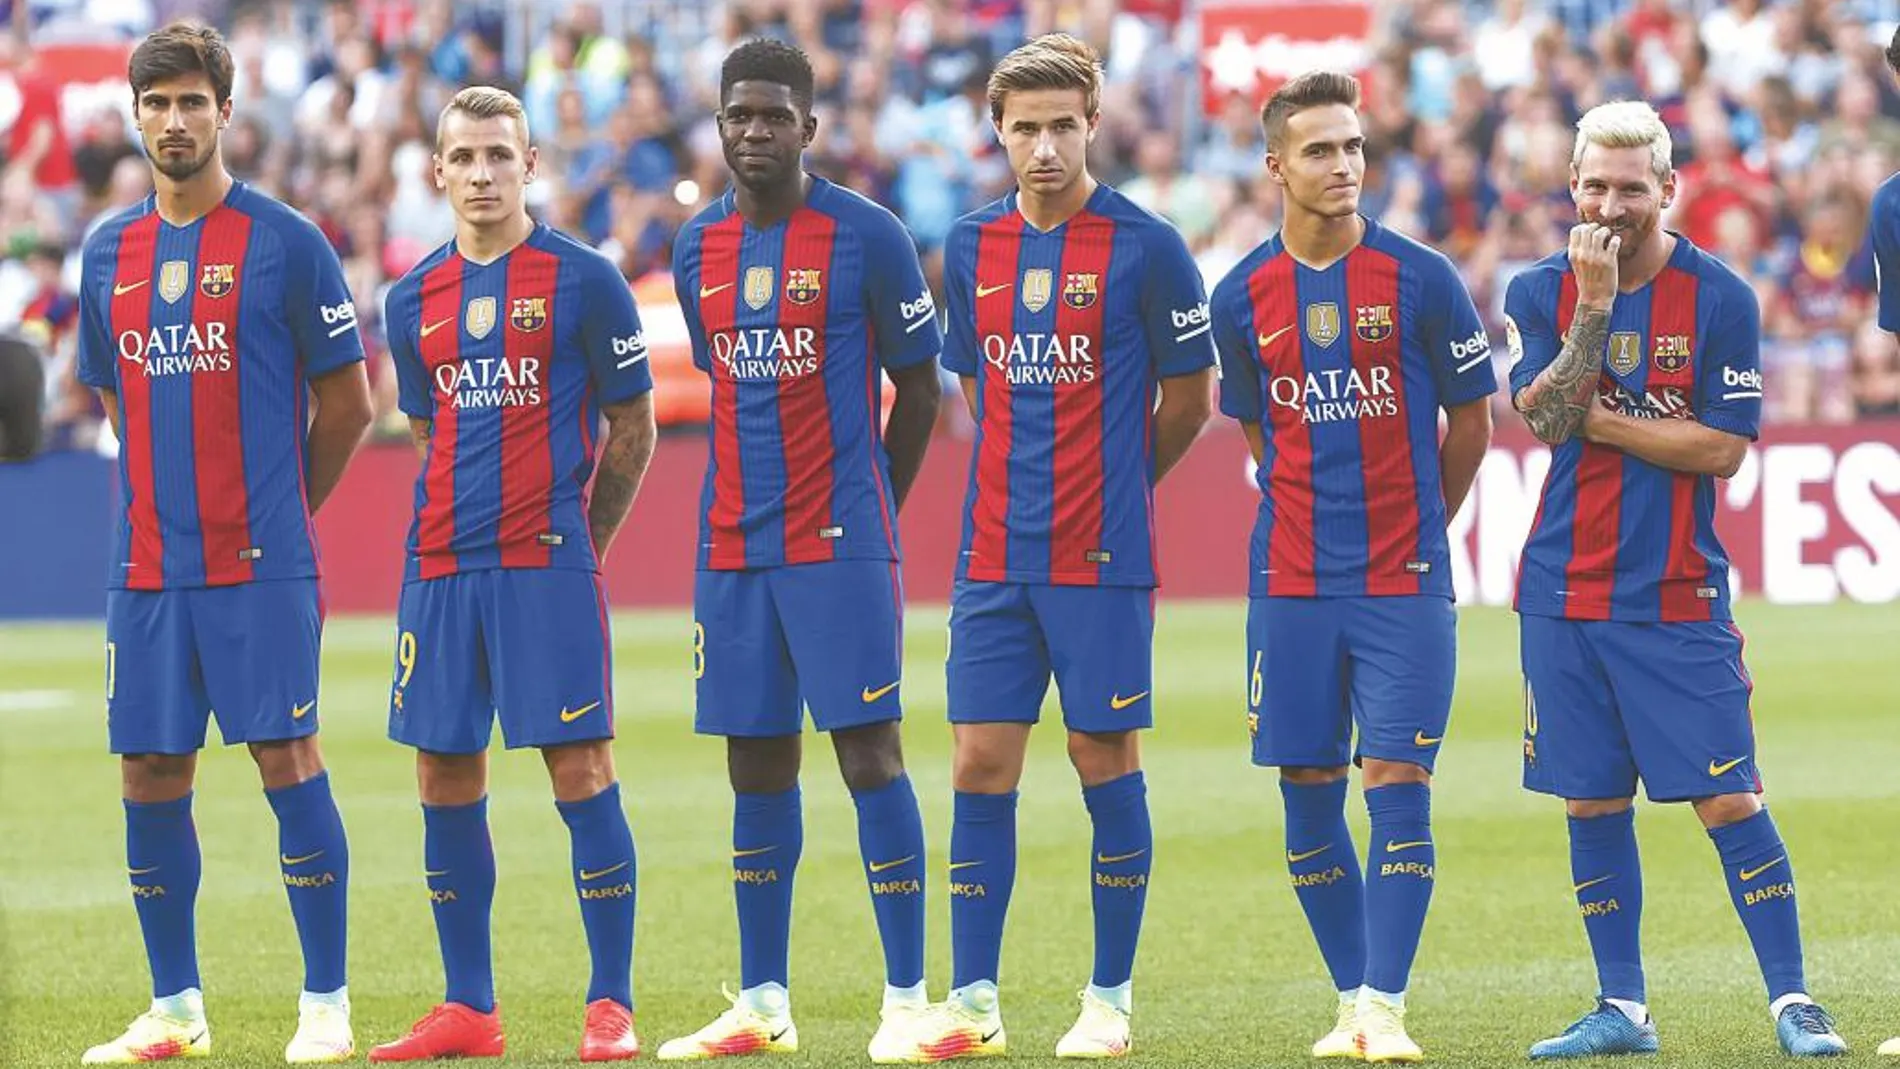 André Gomes, Digné, Umtiti, Samper y Denis Suárez acompañan a Messi